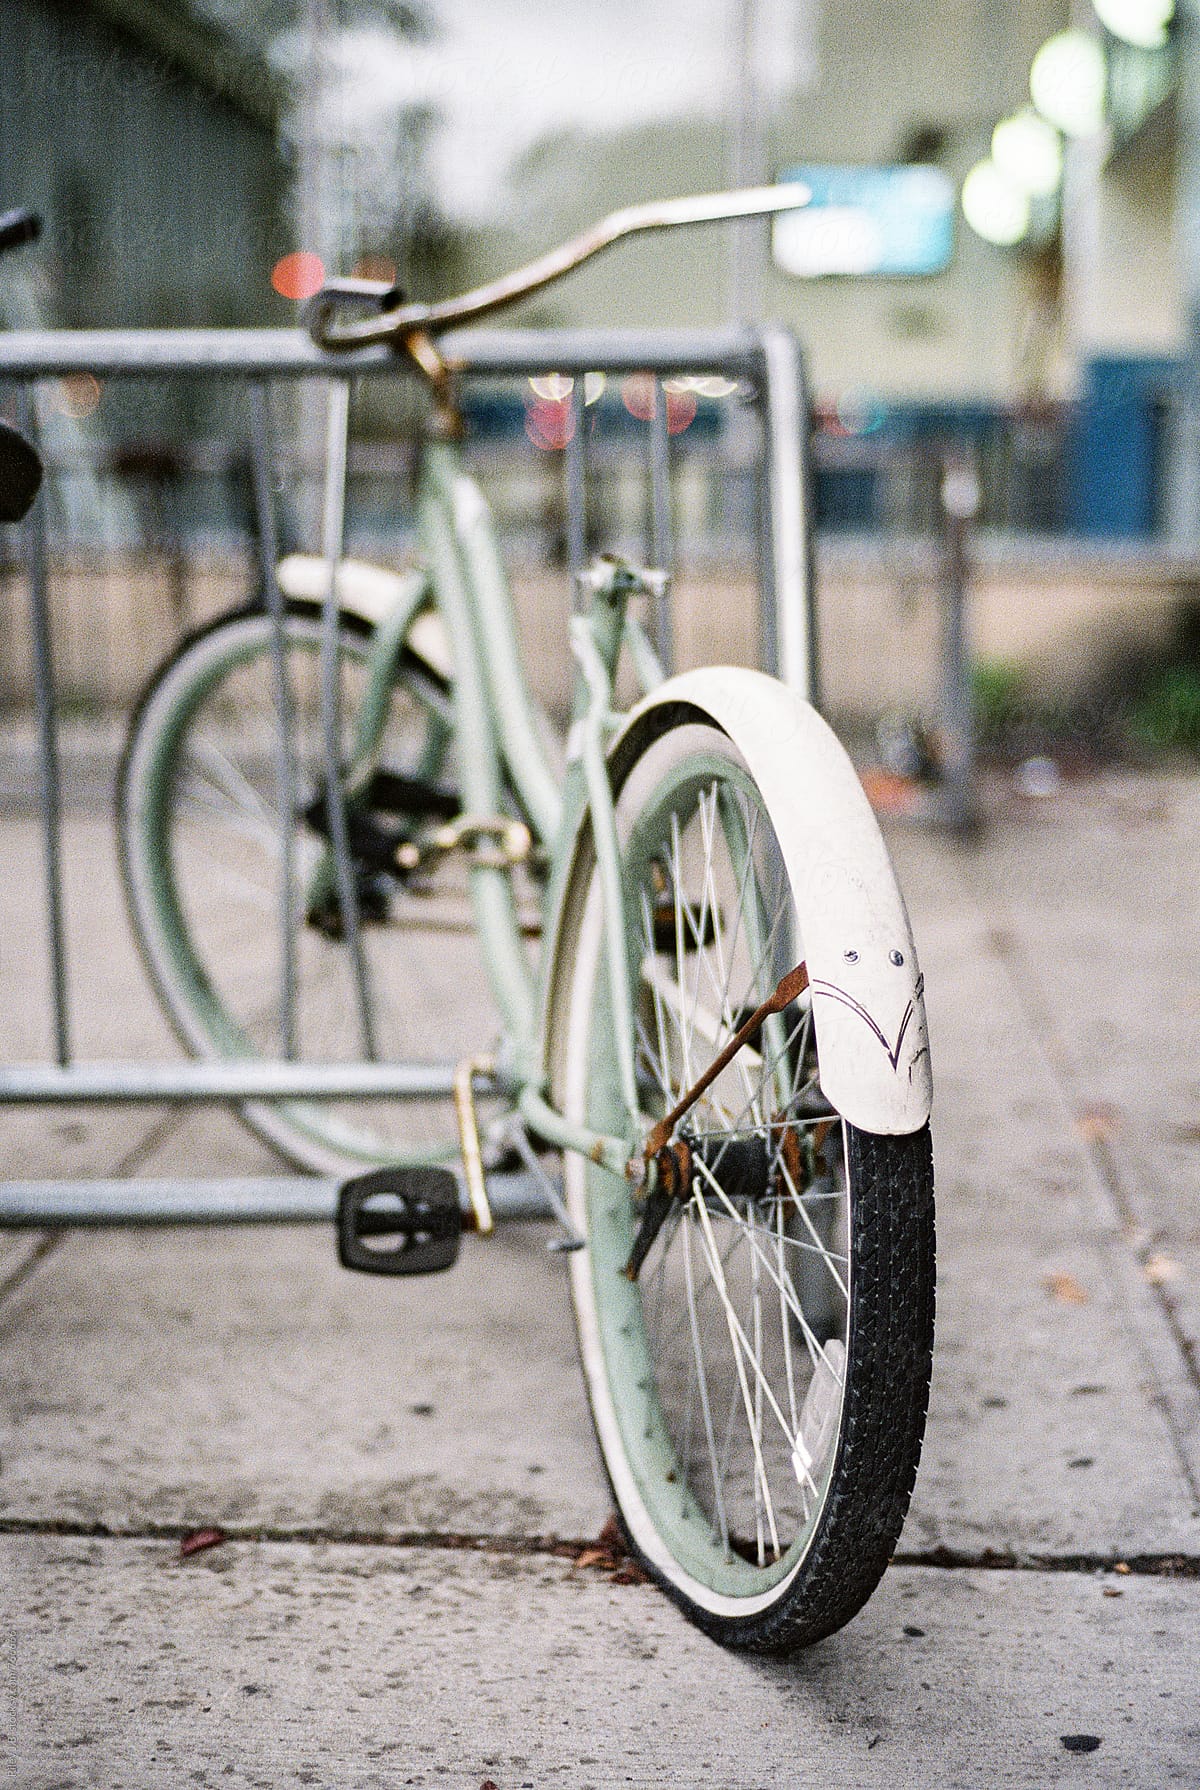 Vintage derelict bicycle